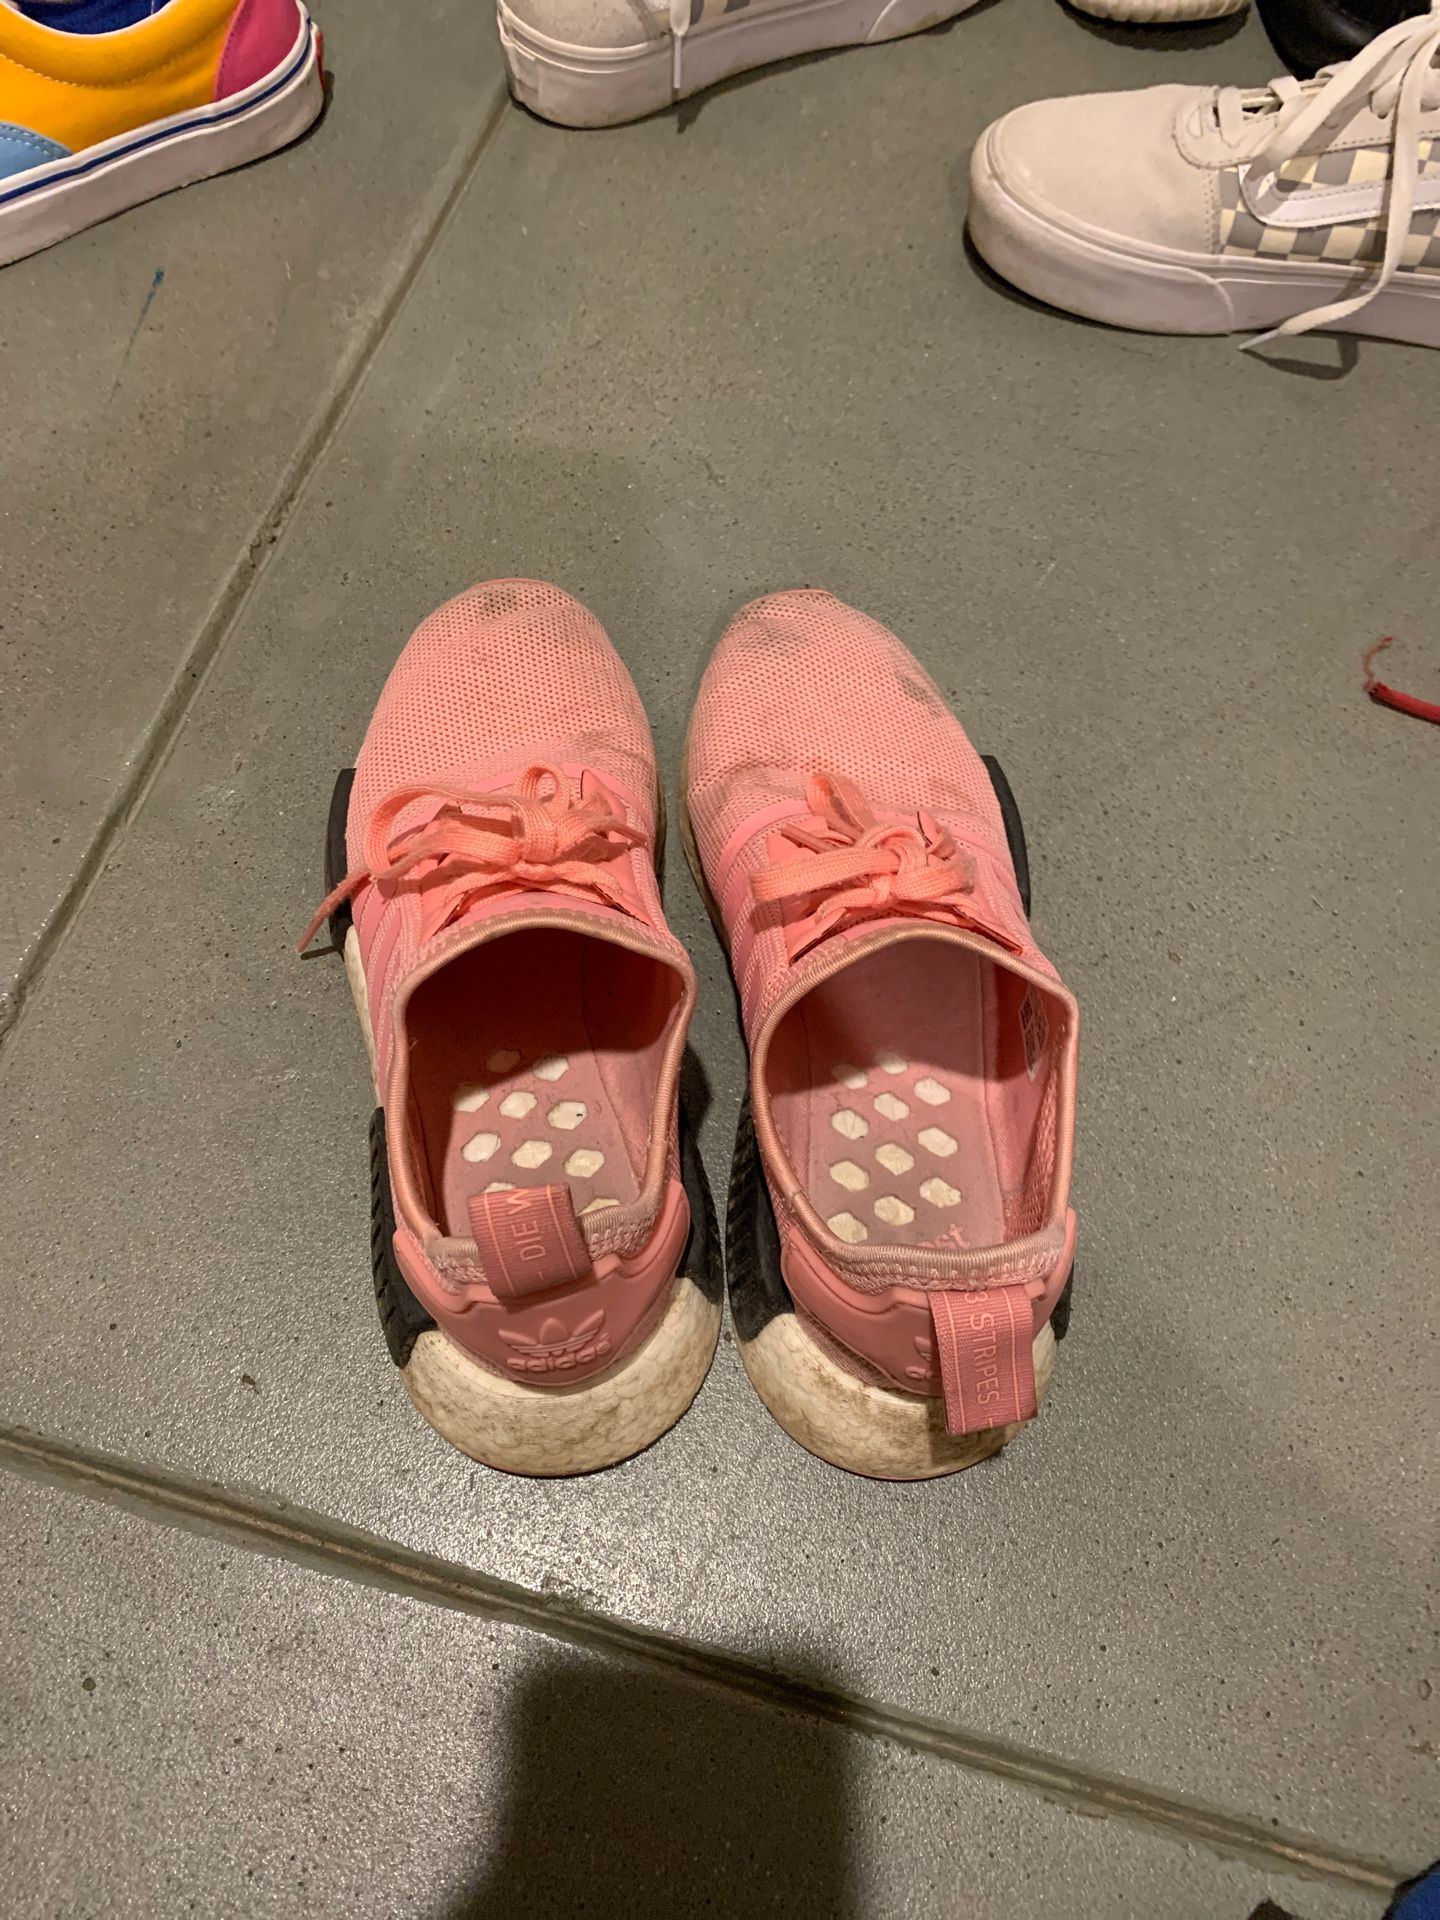 Adidas pink nmd’s